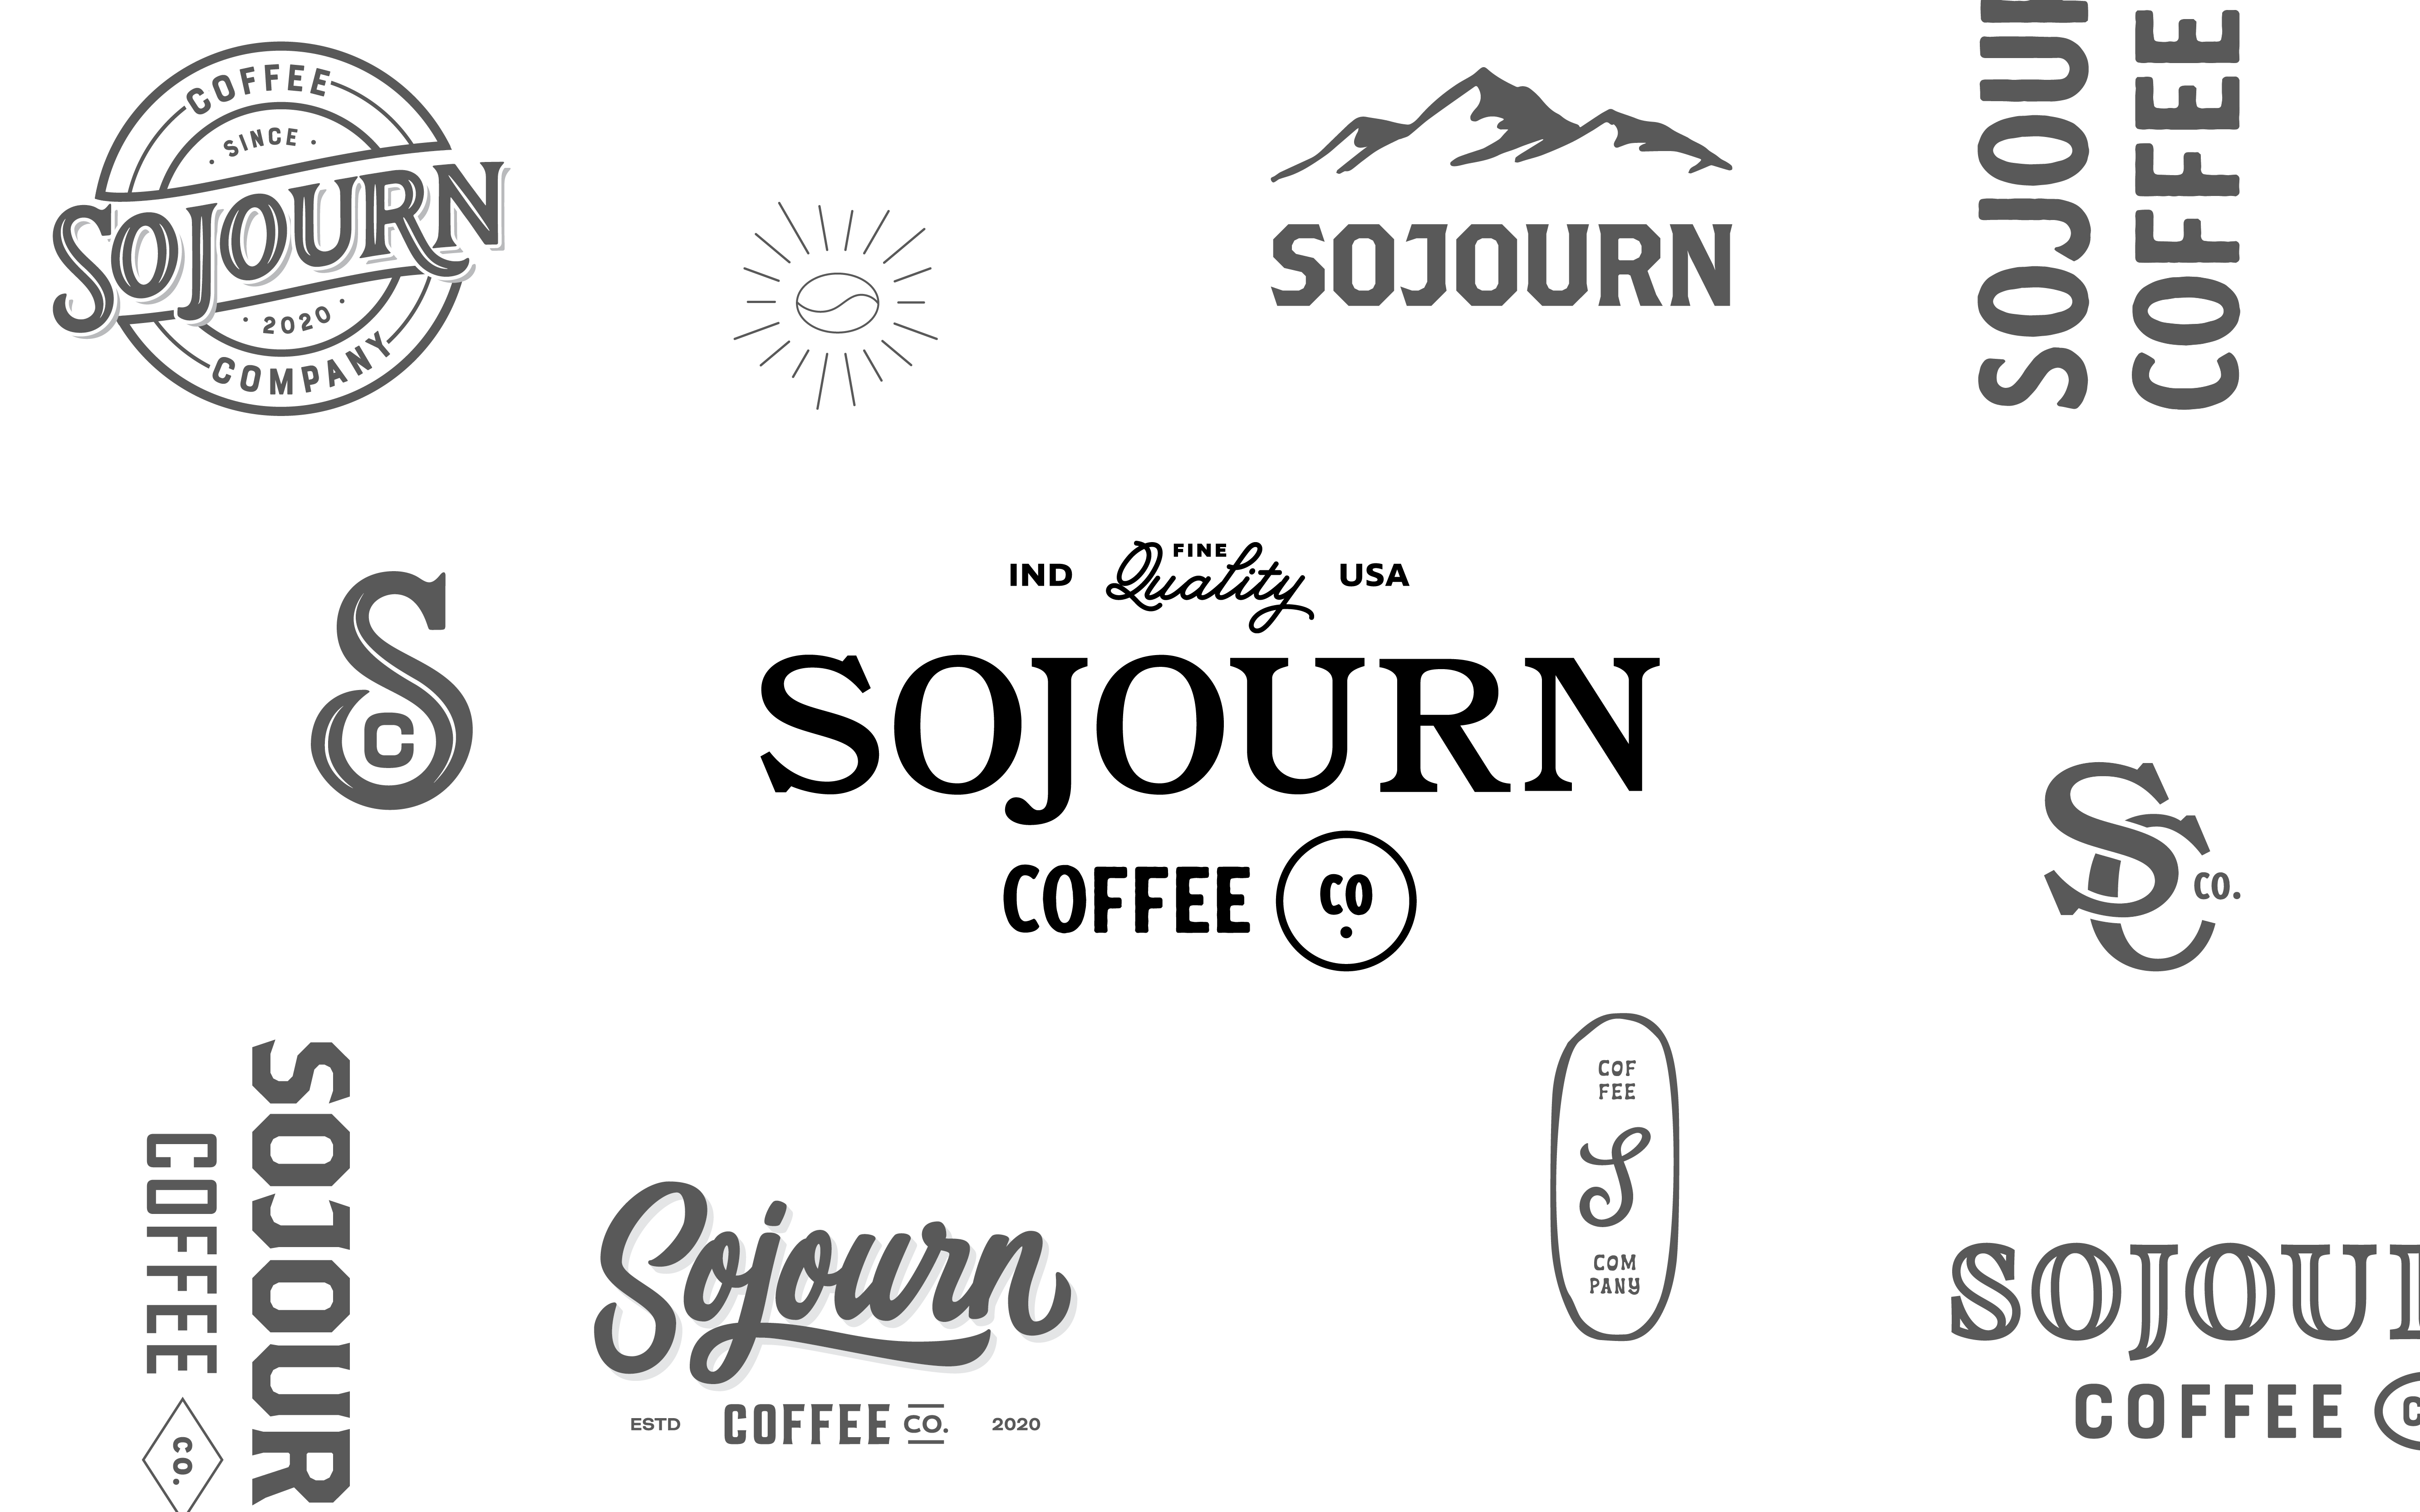 Sojourn Coffee Company